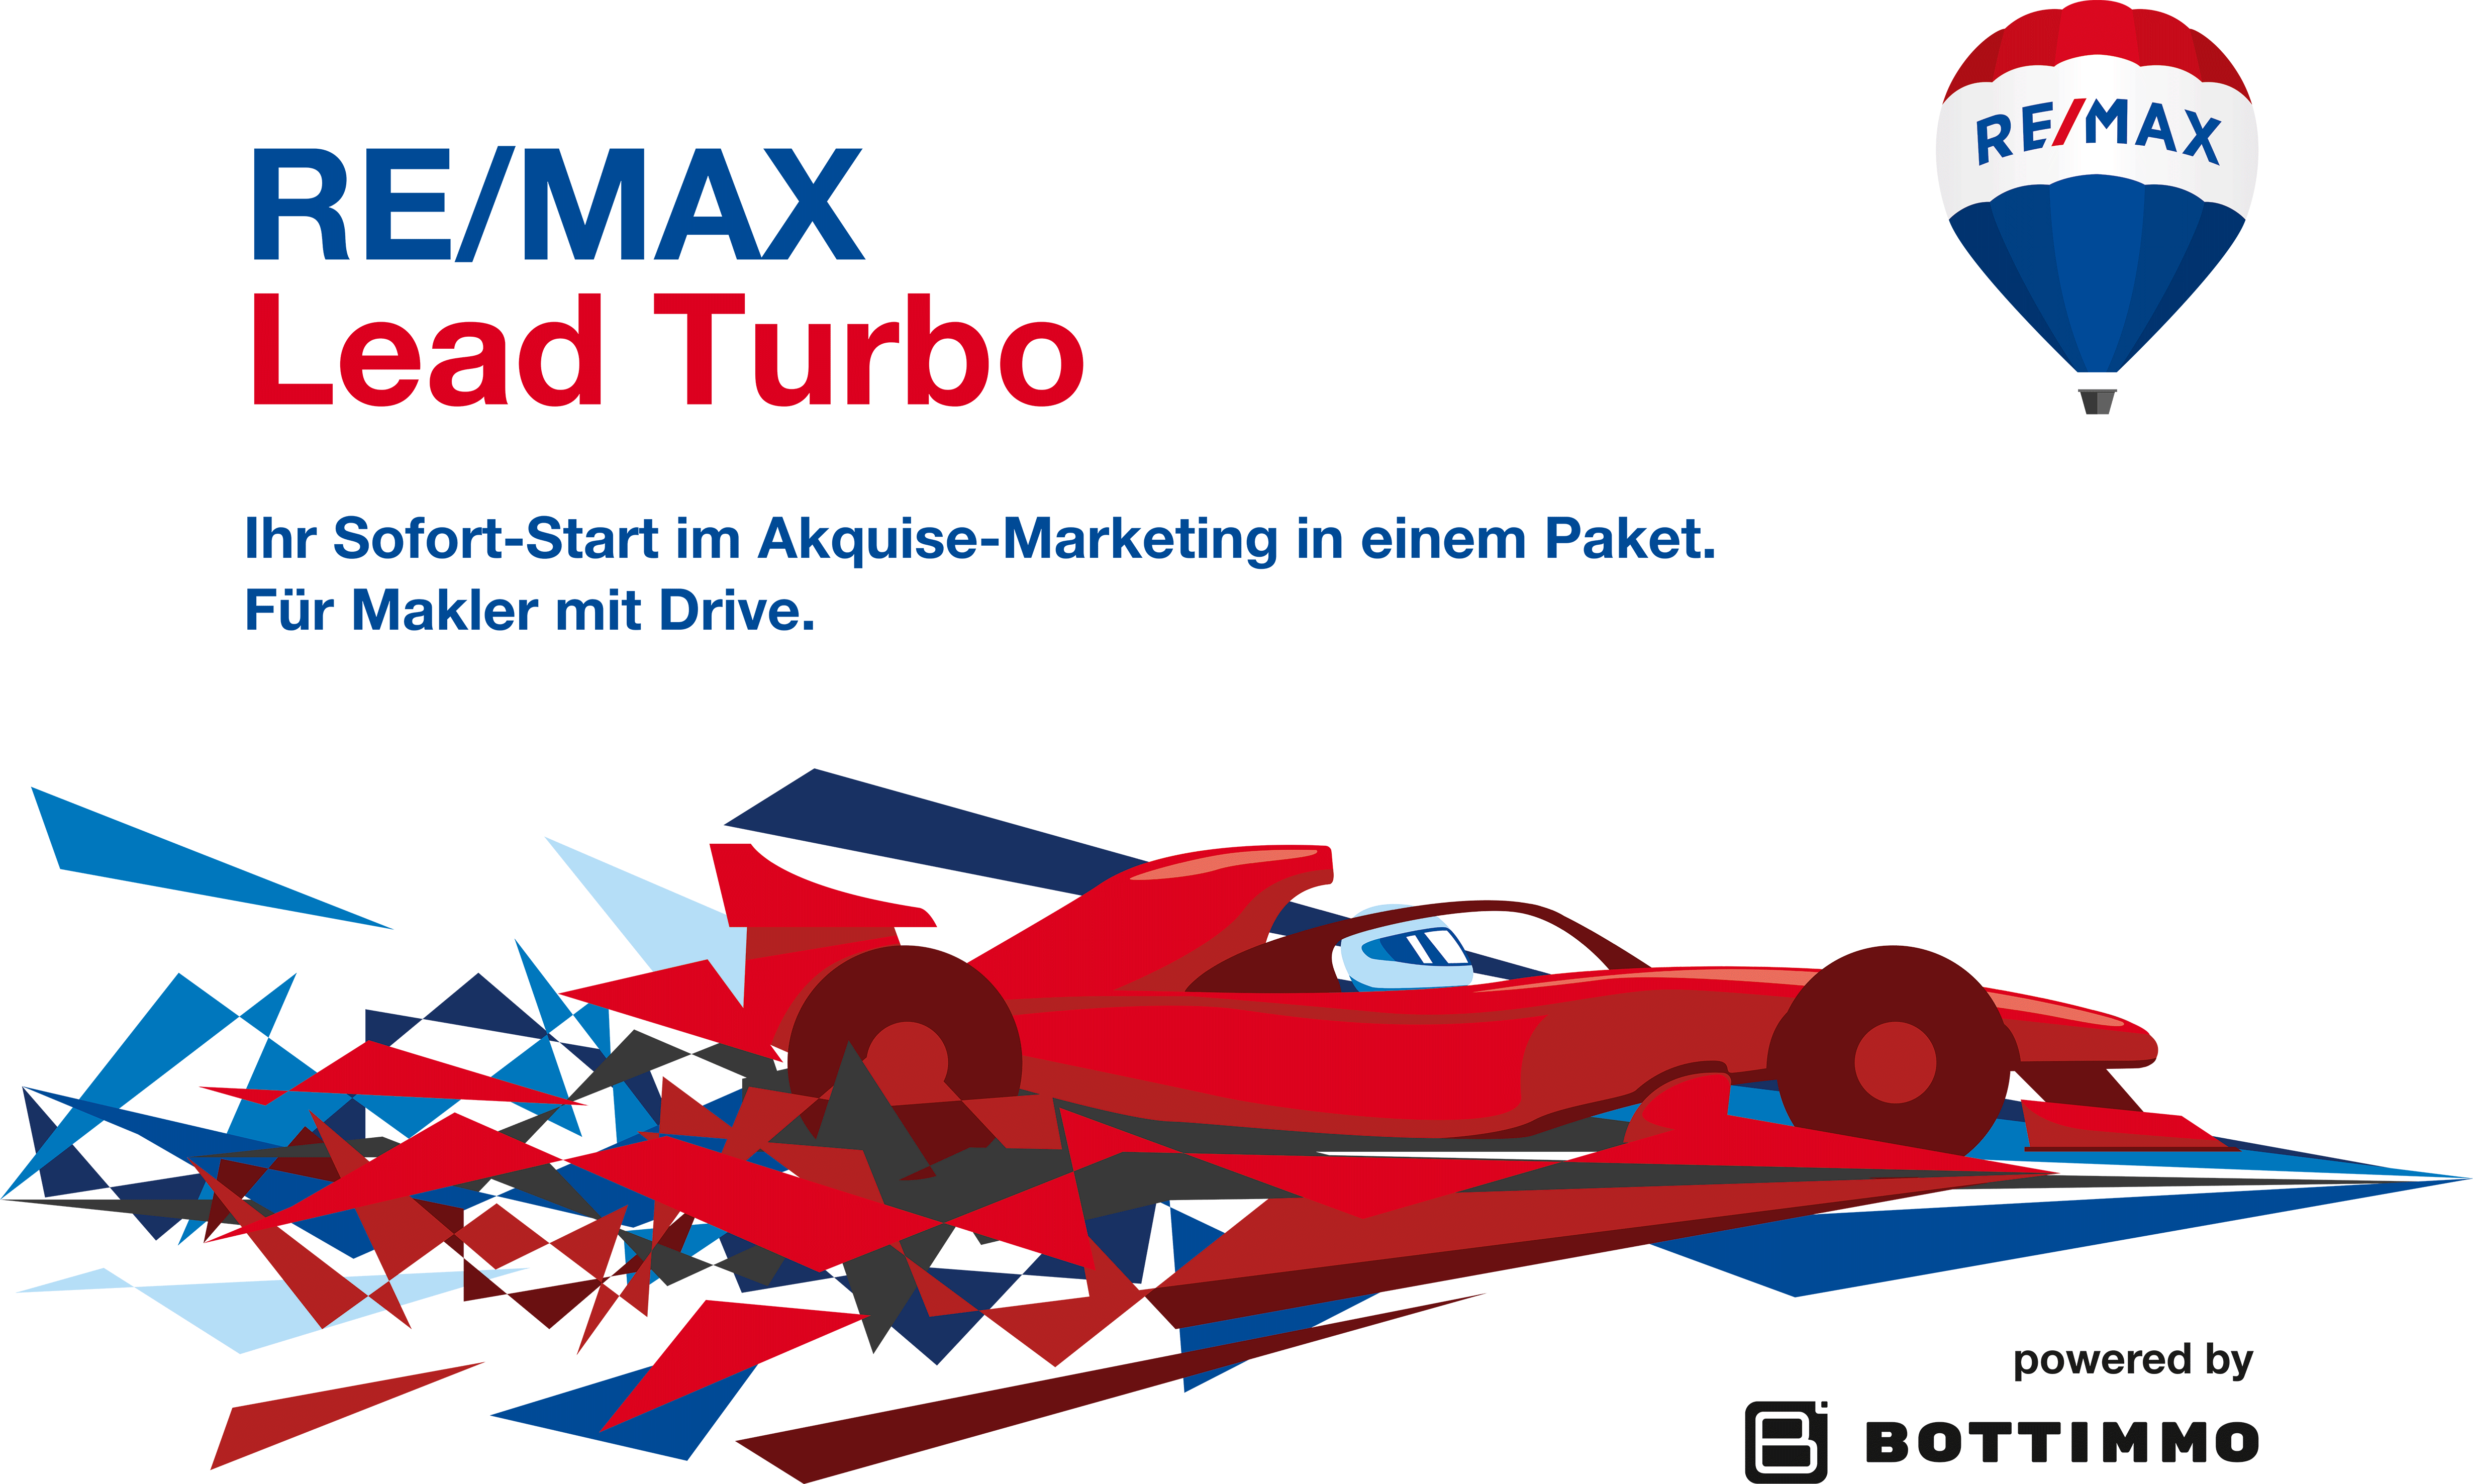 RE/MAX Lead Turbo